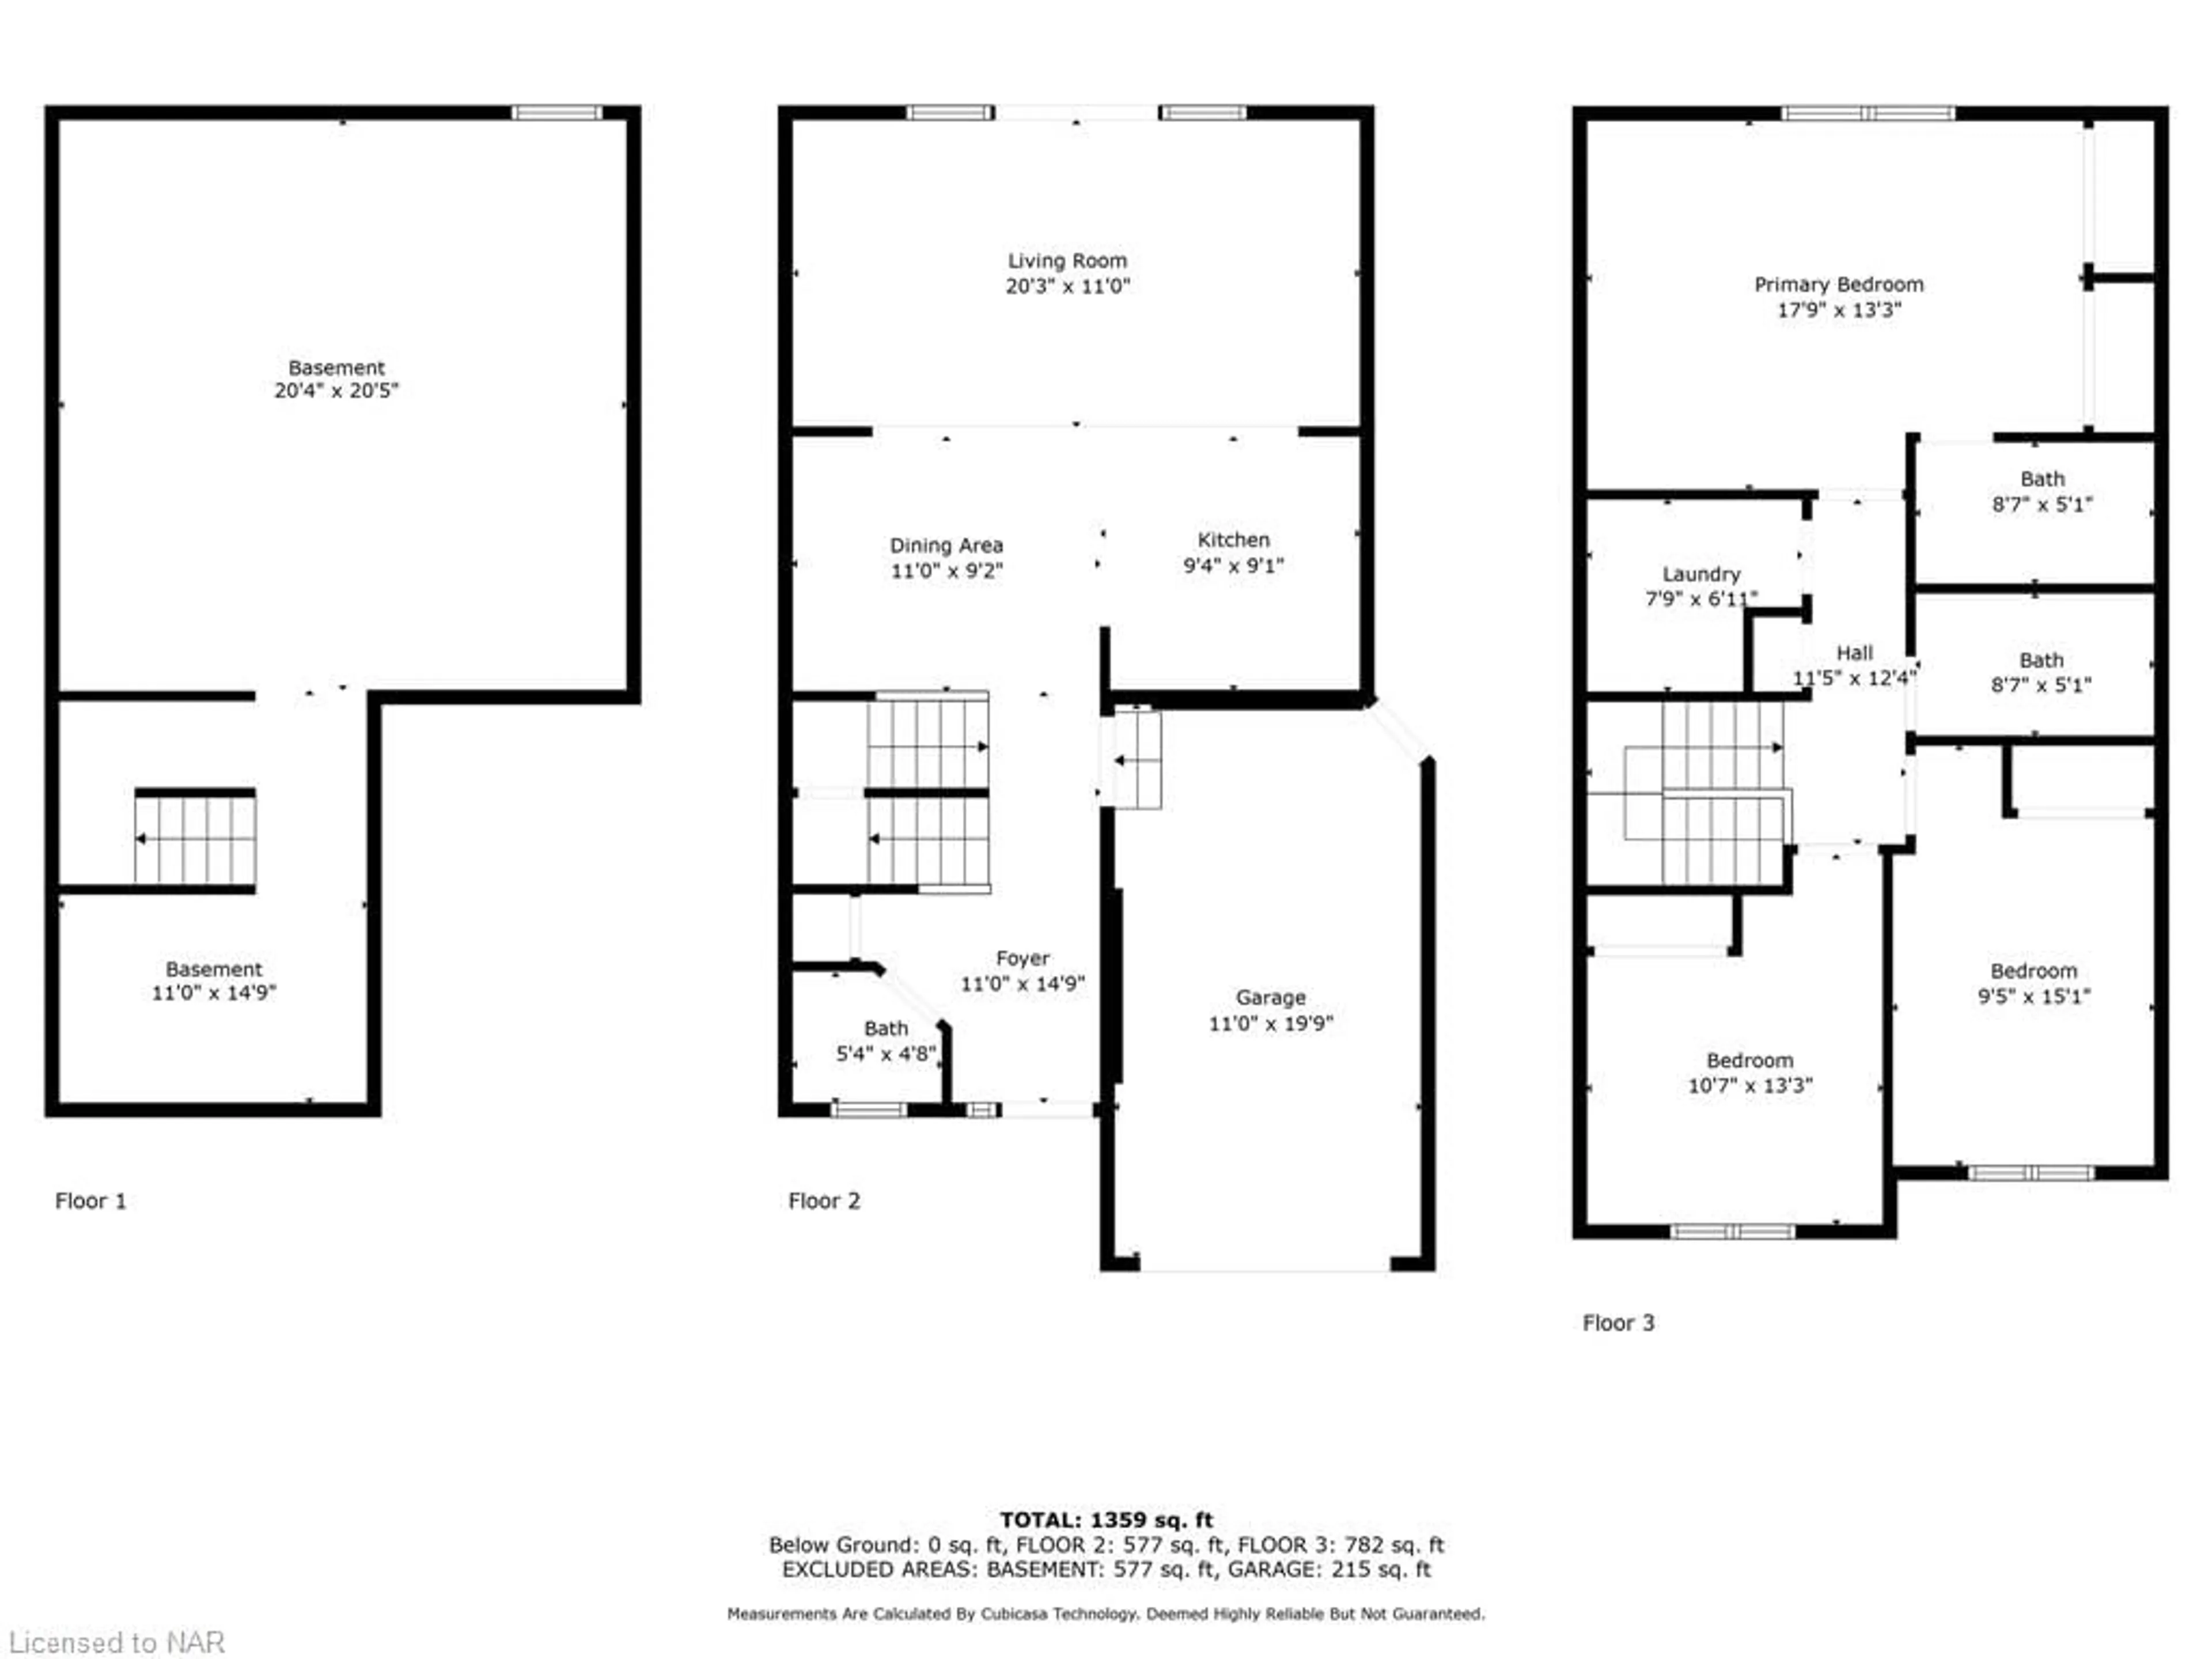 Floor plan for 79 Sumner Cres, Grimsby Ontario L3M 0B4